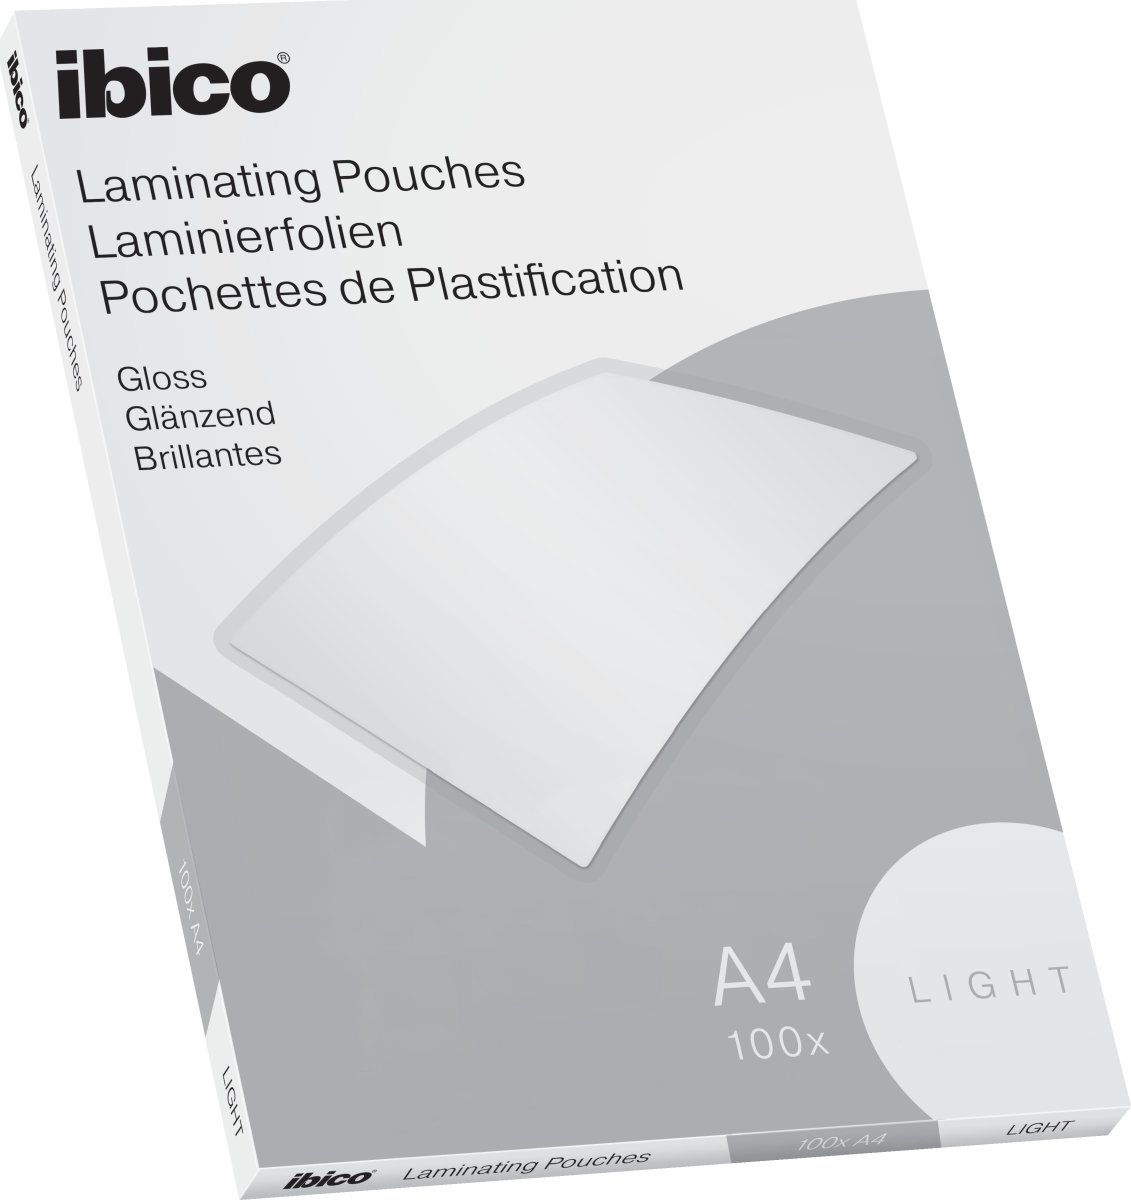 Ibico lamineringsfickor, 80my, A4, 100 st.